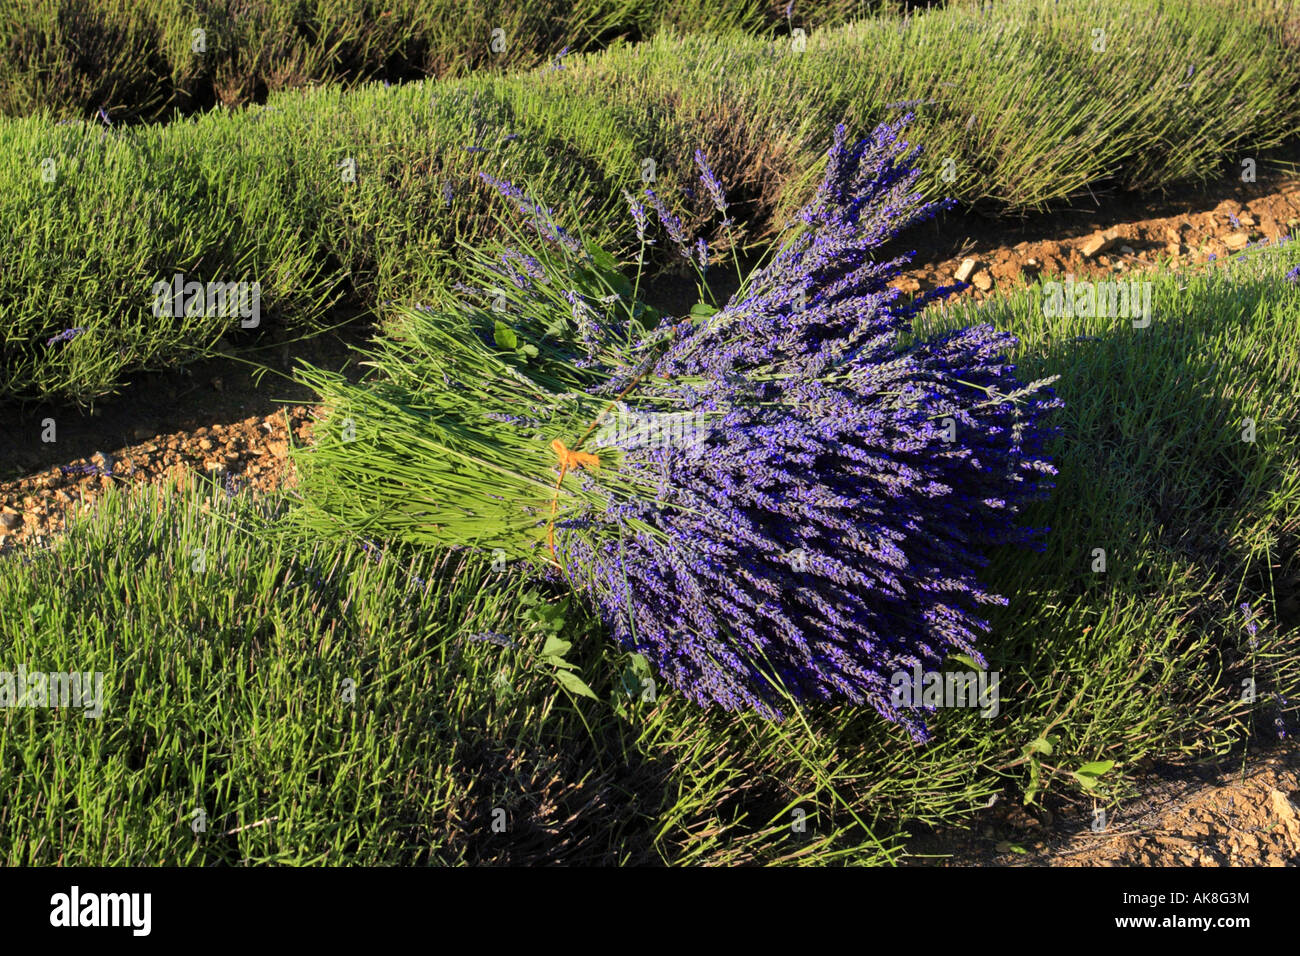 lavender (Lavandula angustifolia), field of Lavender, France, Provence, Vaucluse Stock Photo